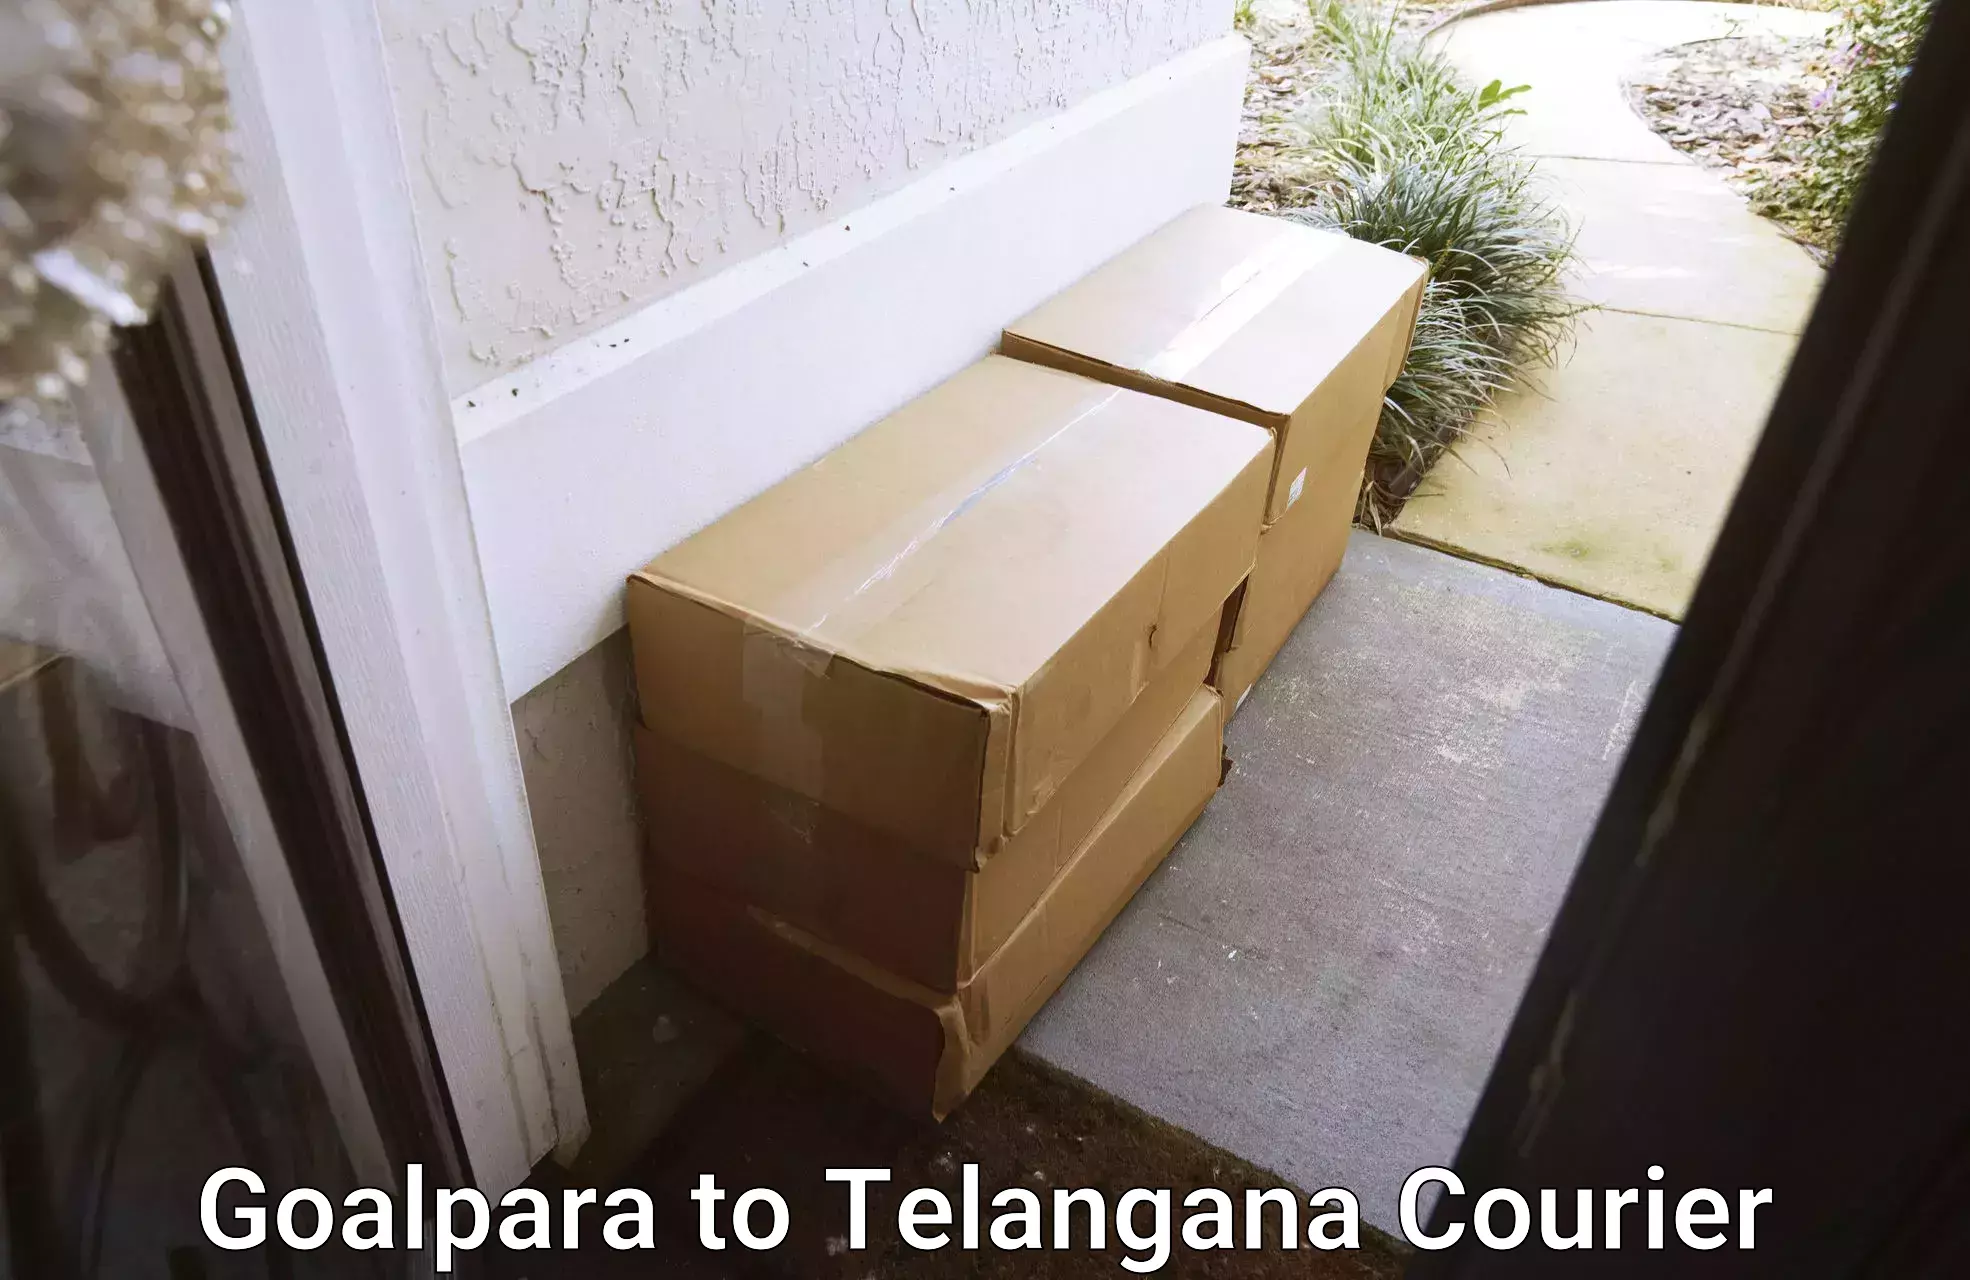 Cargo delivery service Goalpara to Wyra